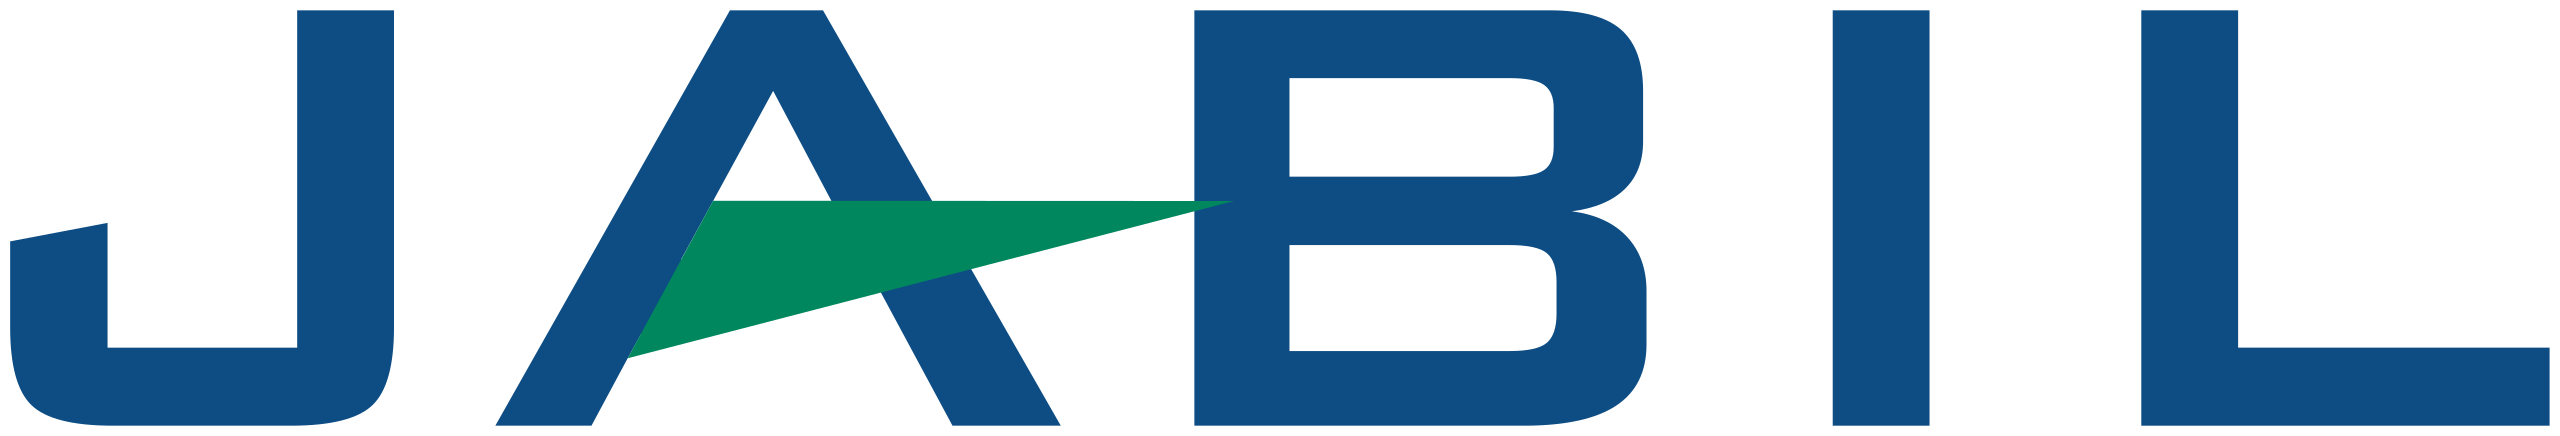 Jabil-logo